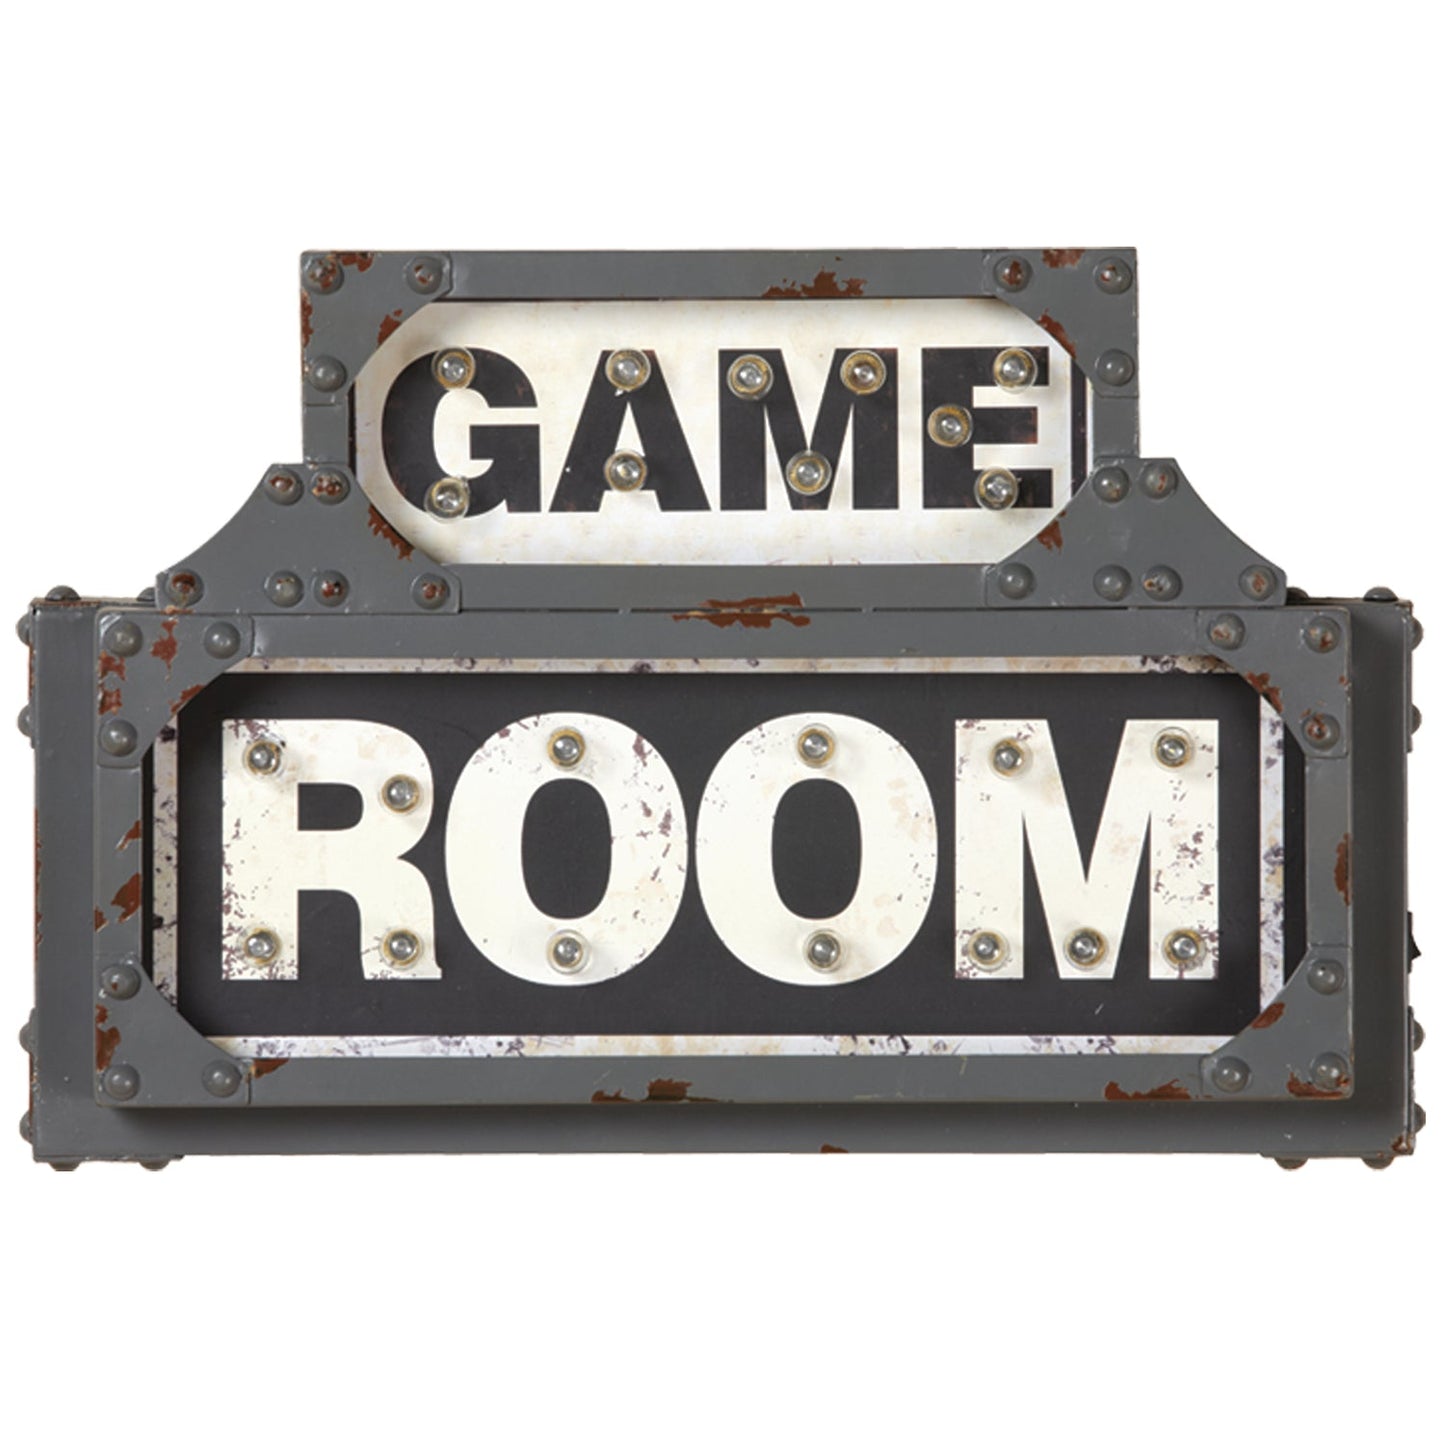 METAL SIGN-GAME ROOM-Game Table Genie